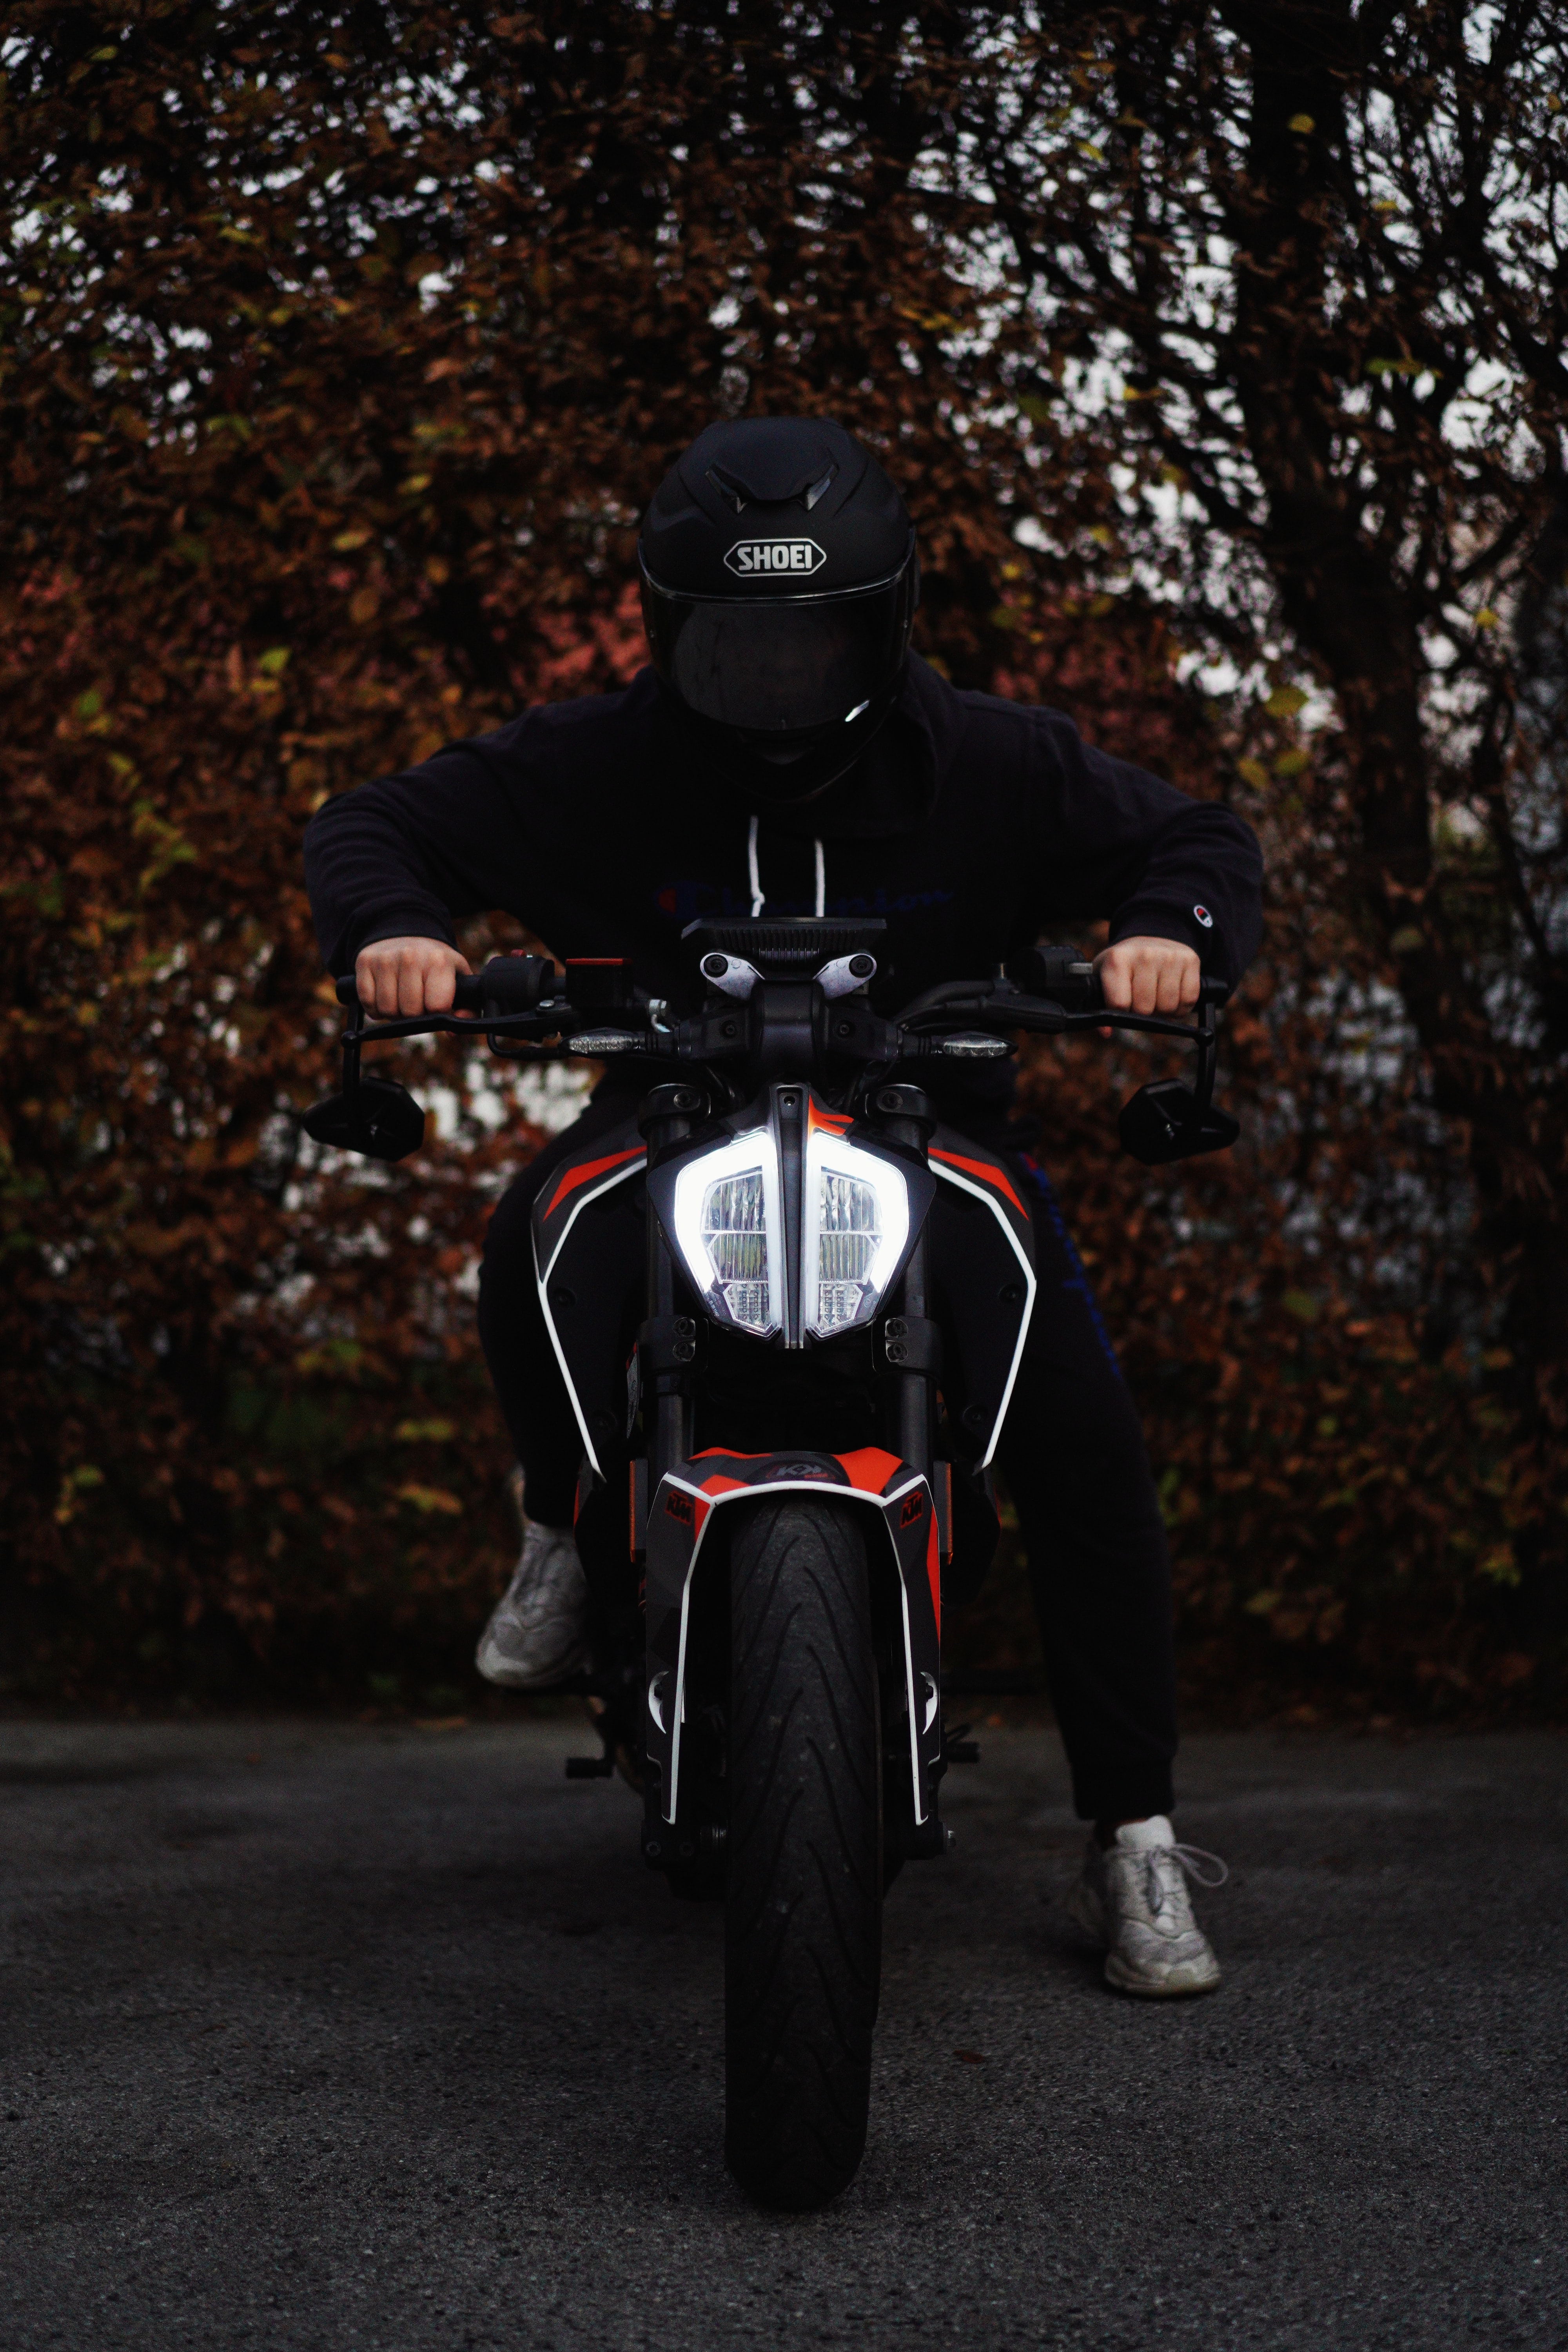 85371 descargar imagen motociclista, motocicletas, casco, negro, el negro, motocicleta, bicicleta: fondos de pantalla y protectores de pantalla gratis